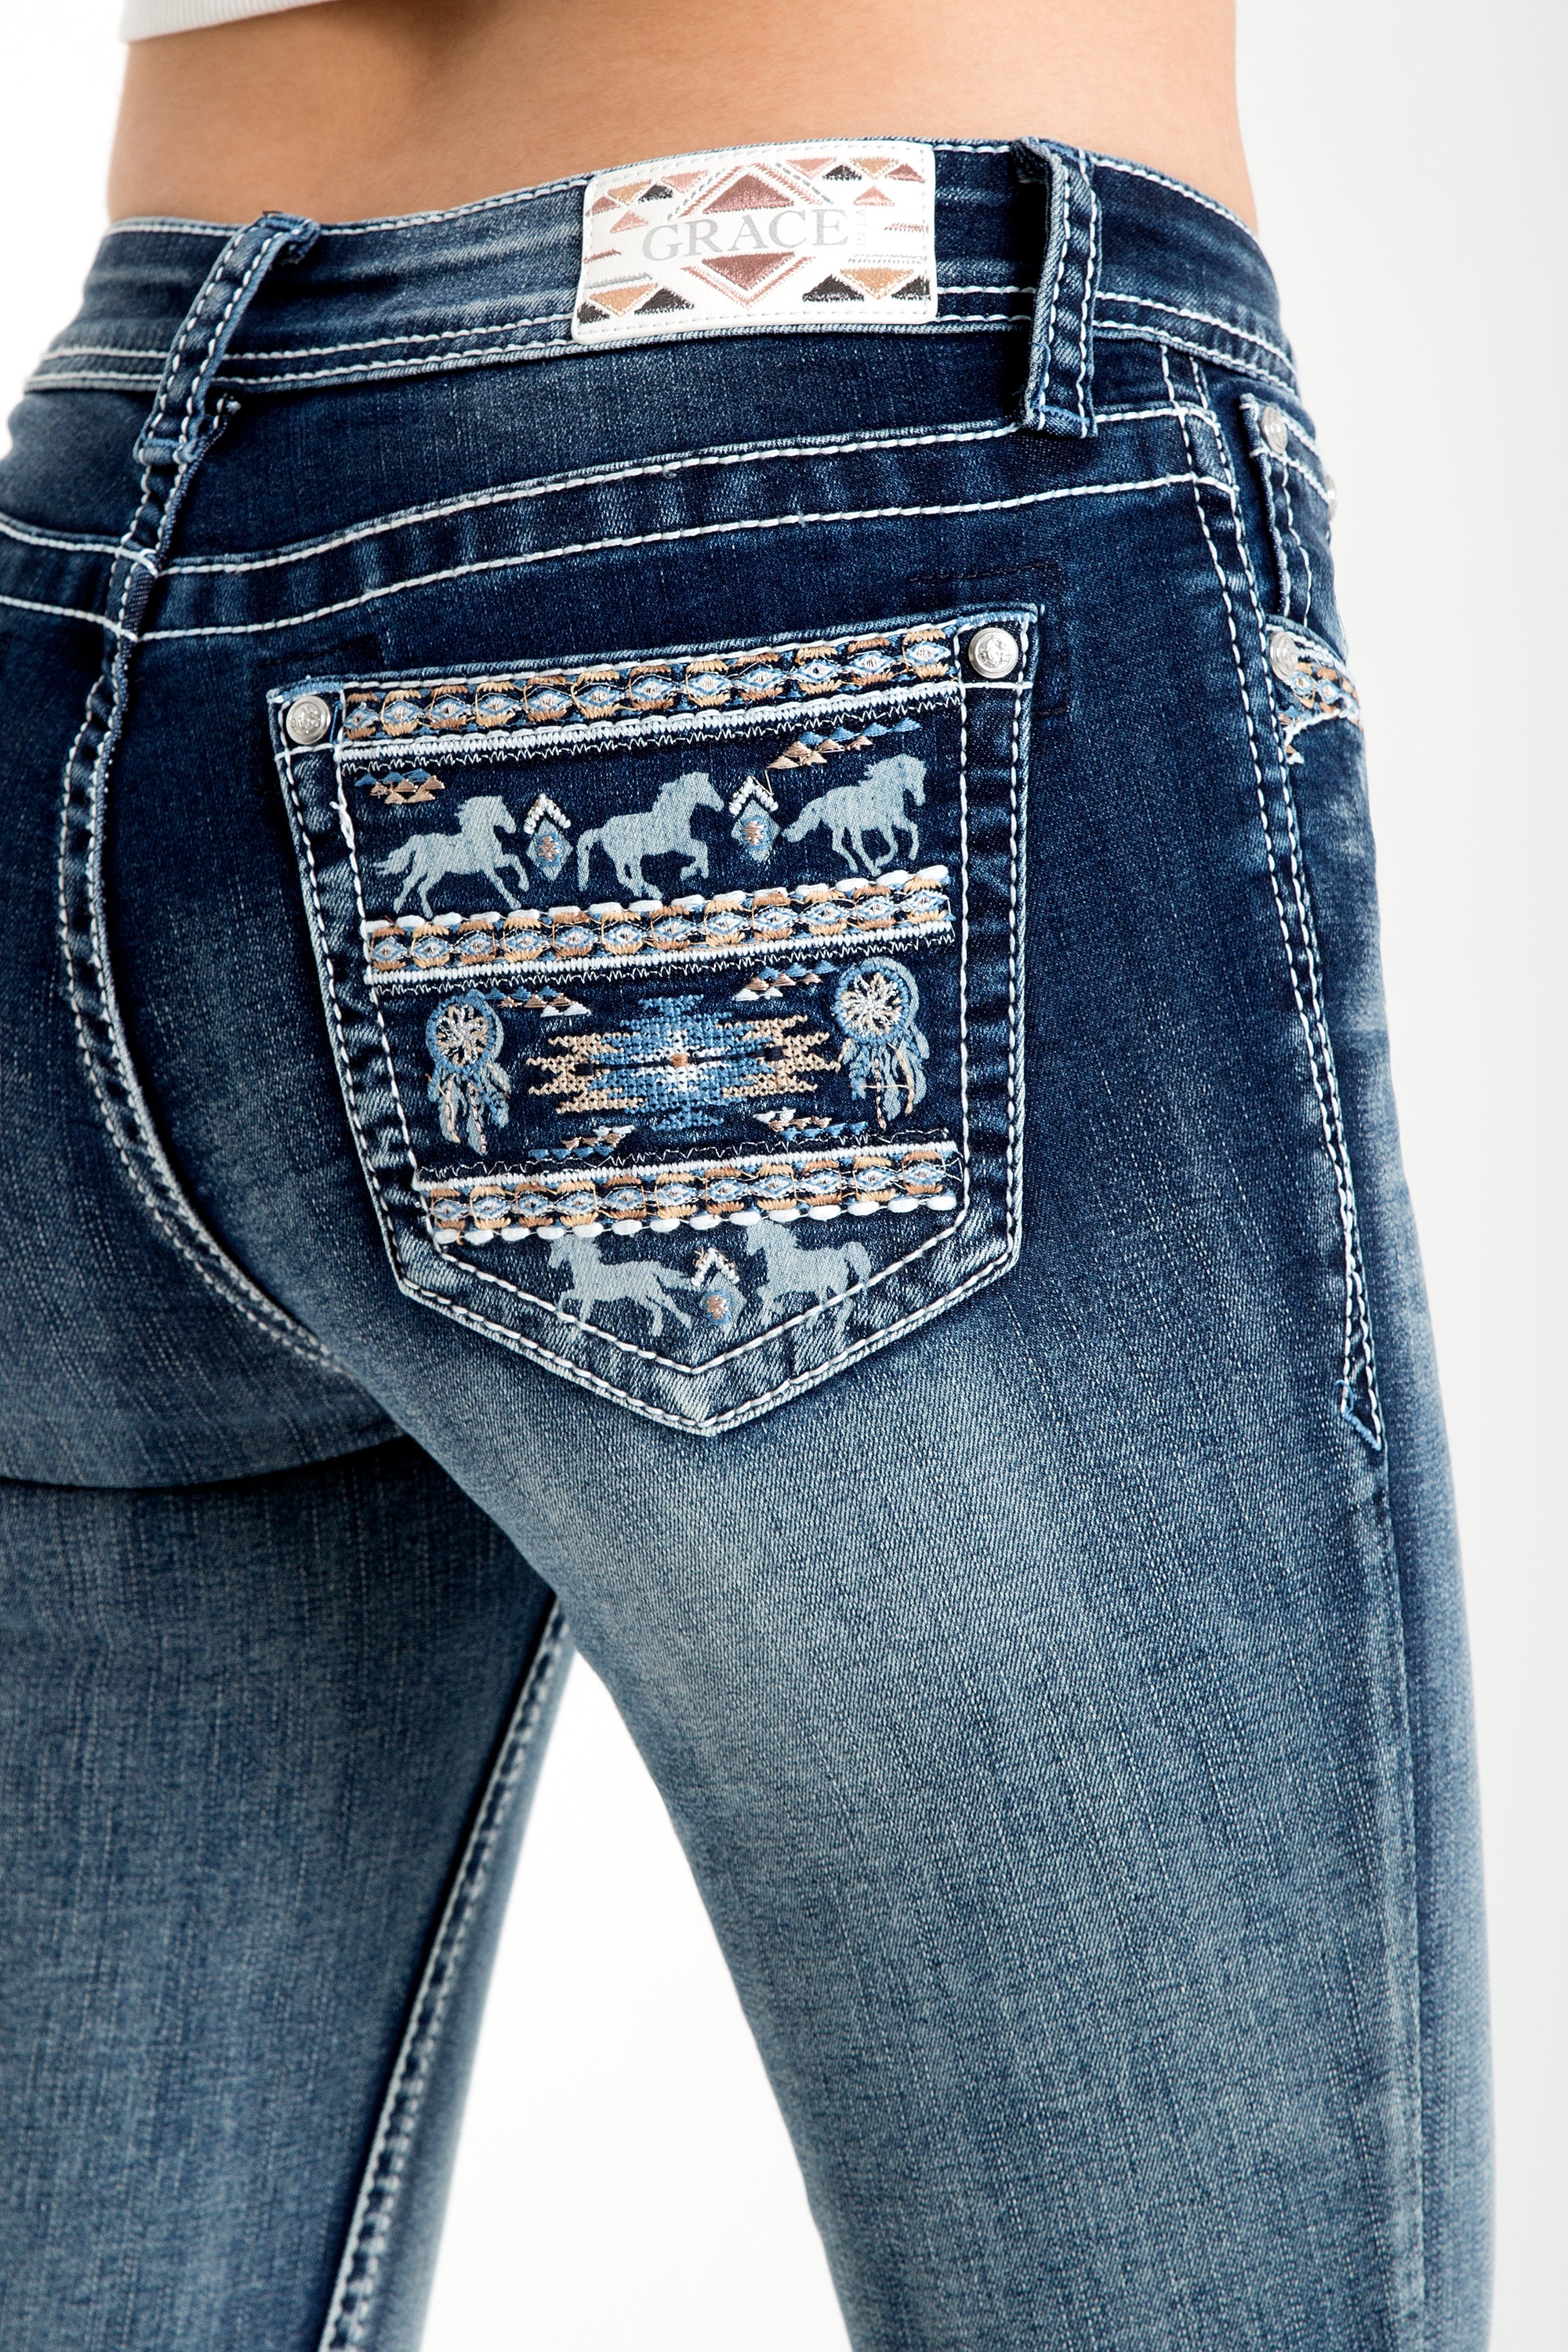 embellished jeans for women